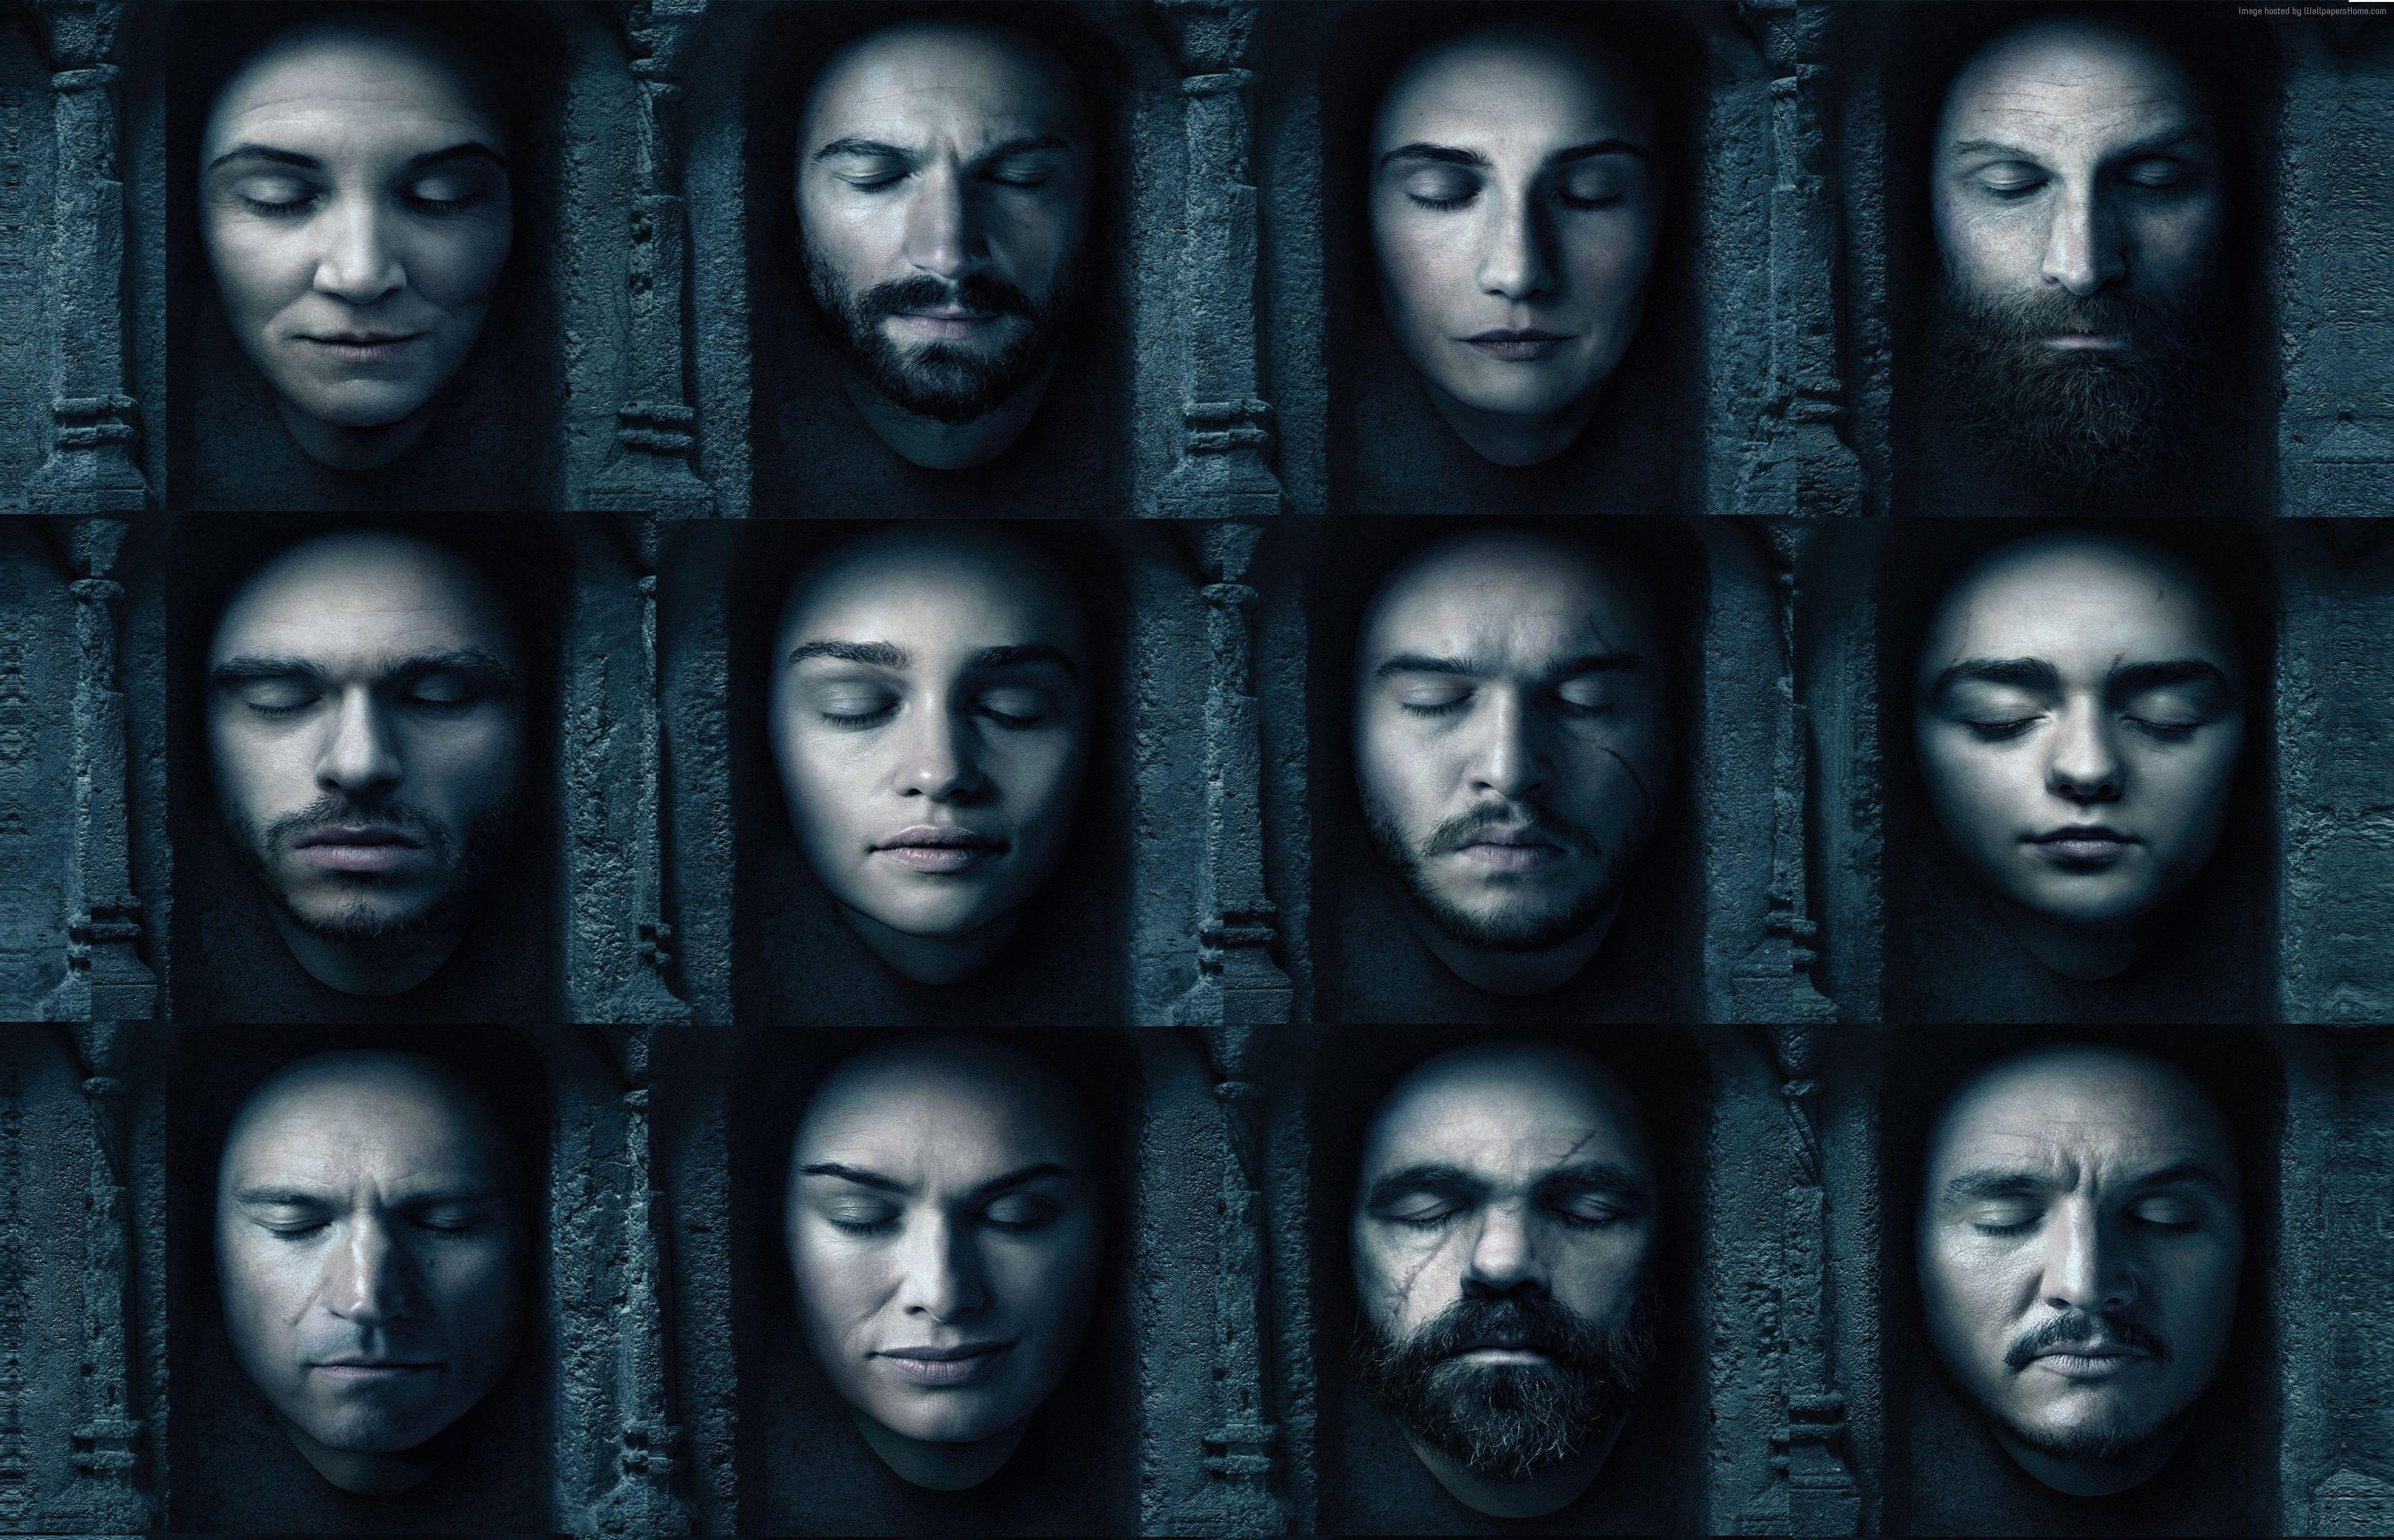 Game of Thrones Wallpaper, Movies: Game of Thrones, 6 season, Jon